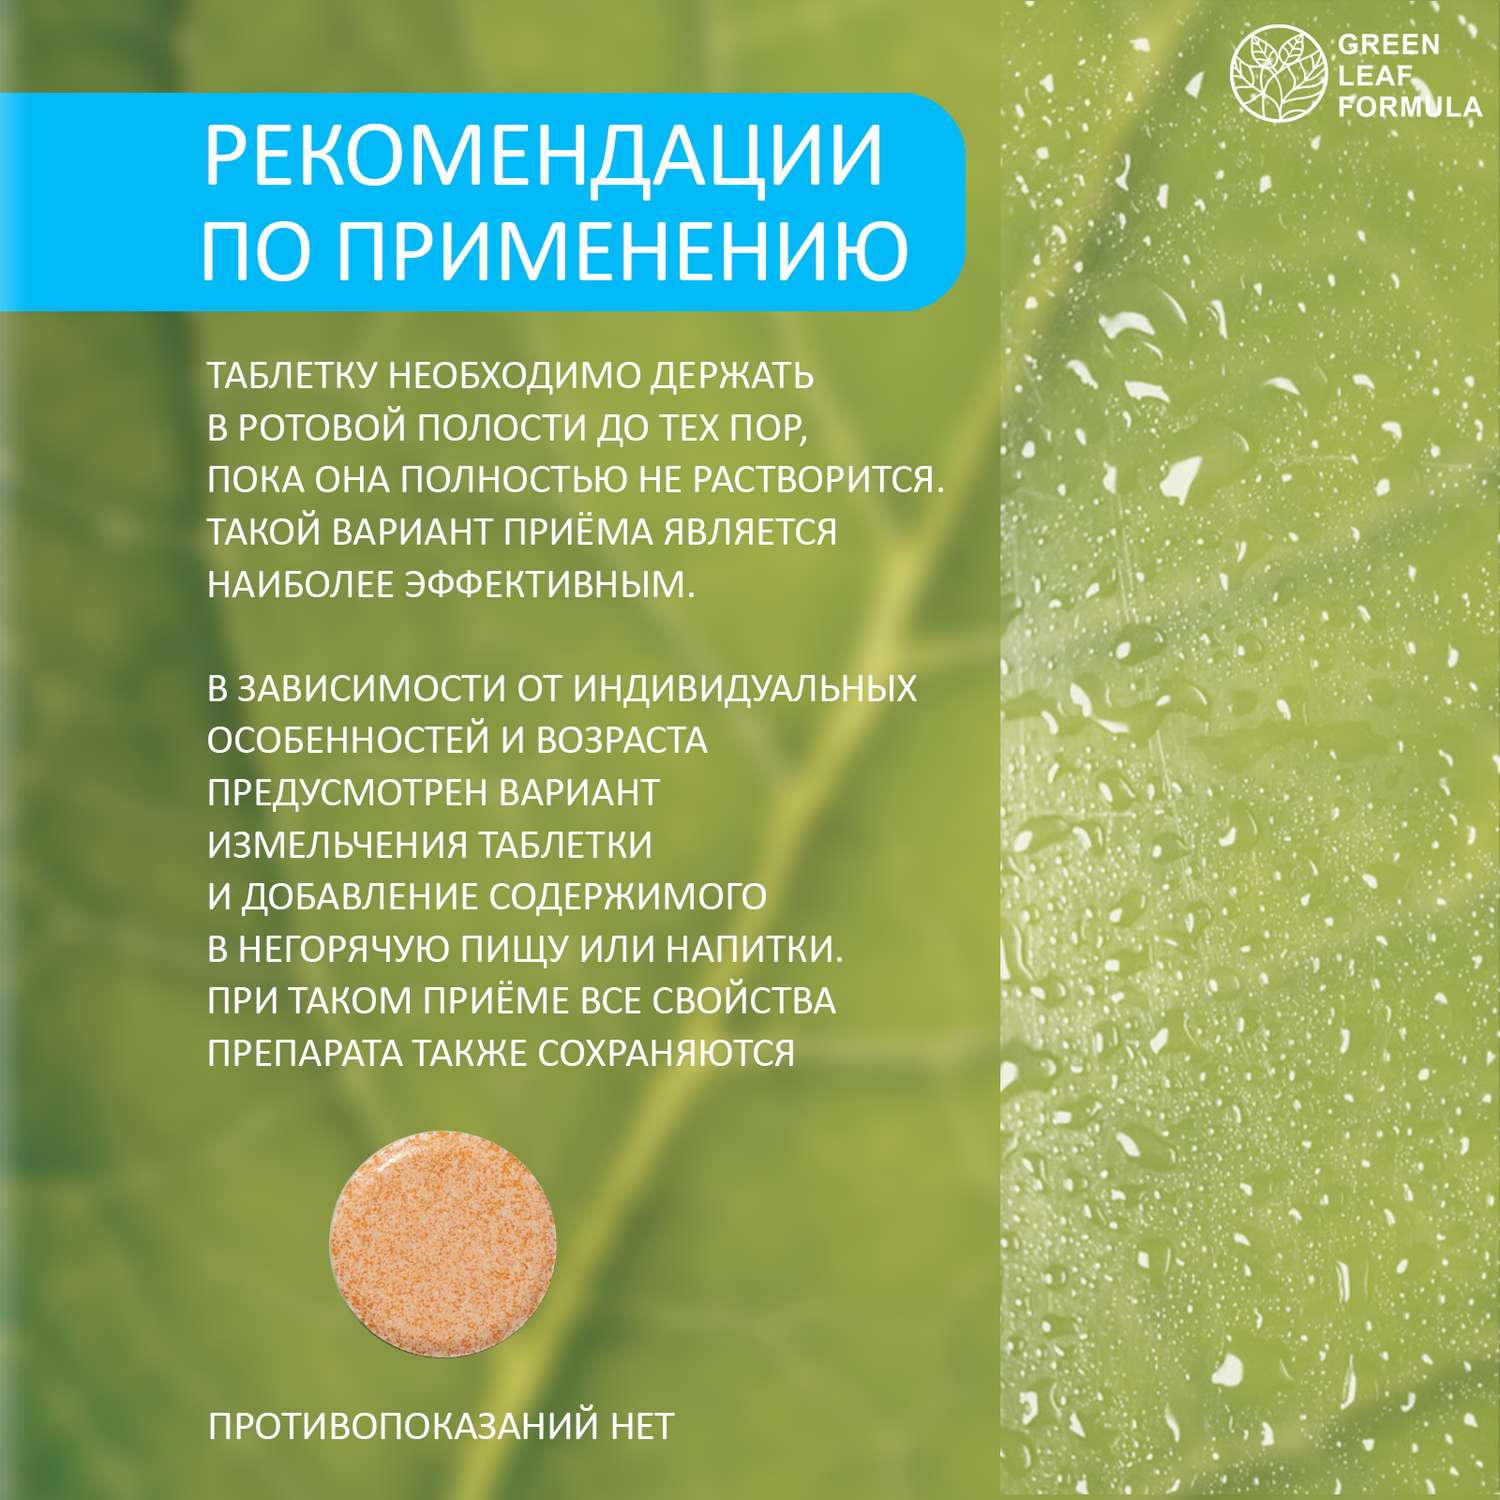 Колострум с метабиотиками Green Leaf Formula пробиотики для детей и взрослых для иммунитета кишечника - фото 7